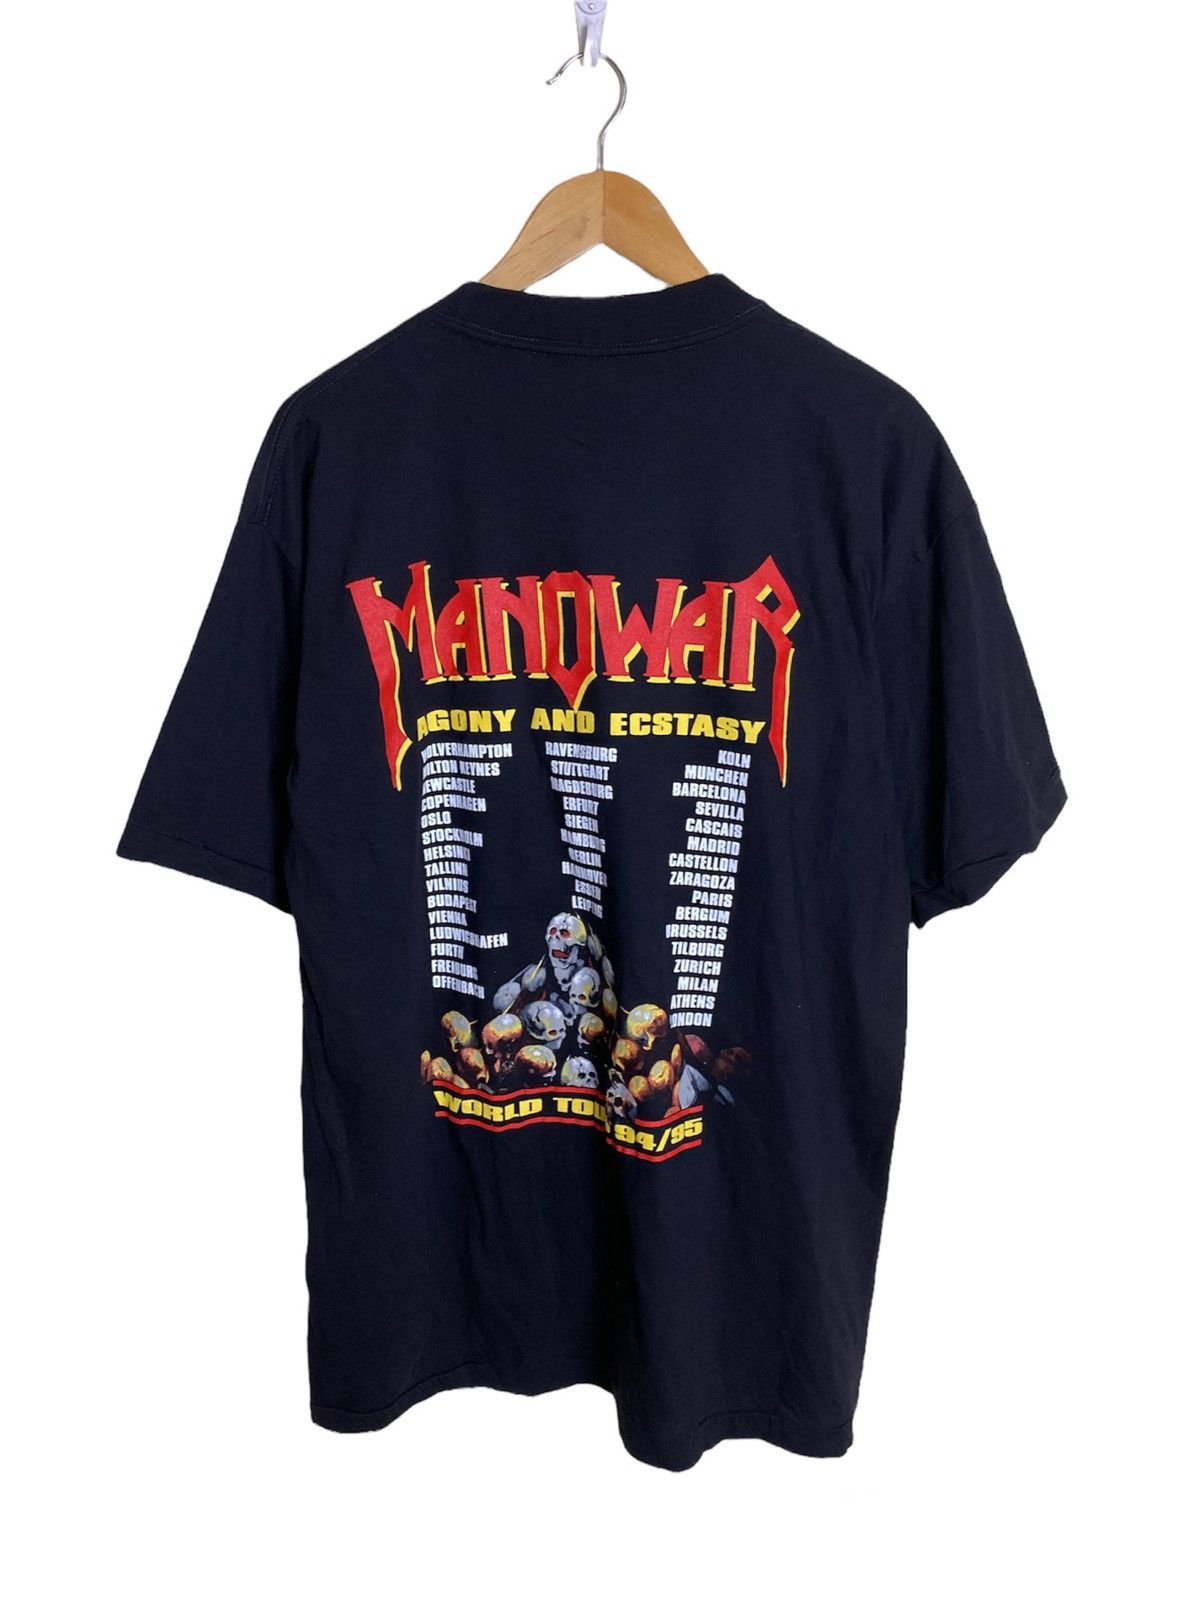 Vintage Euro 90s Manowar World Tour Tshirt - 3